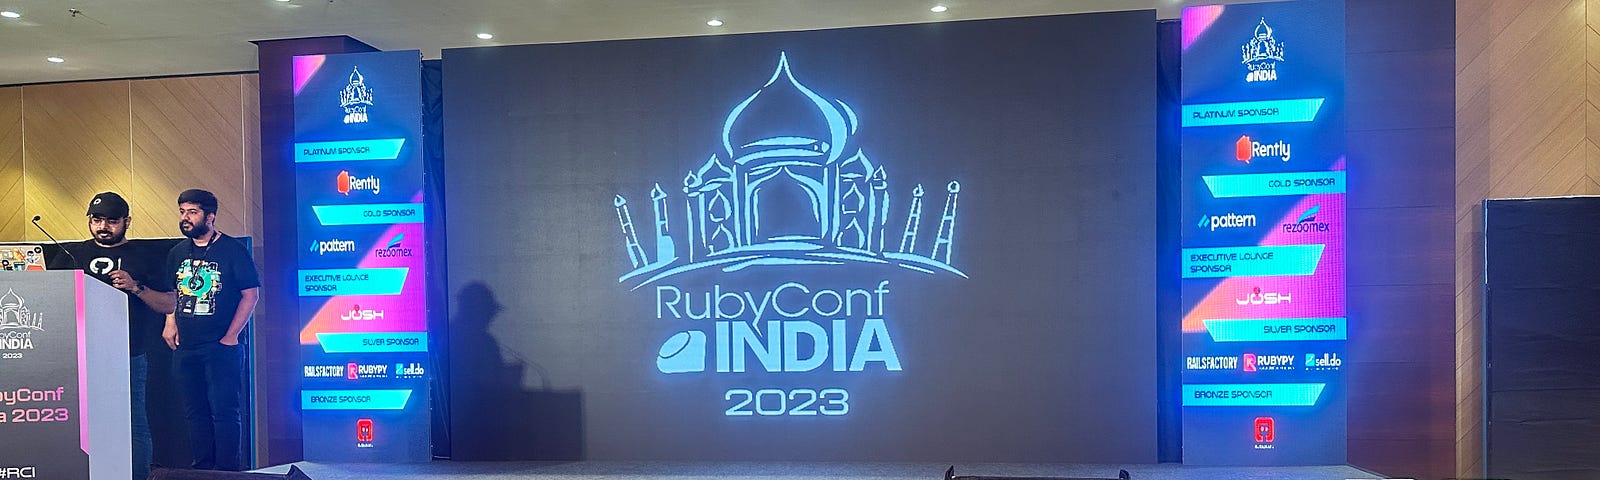 RubyConf India stage setup